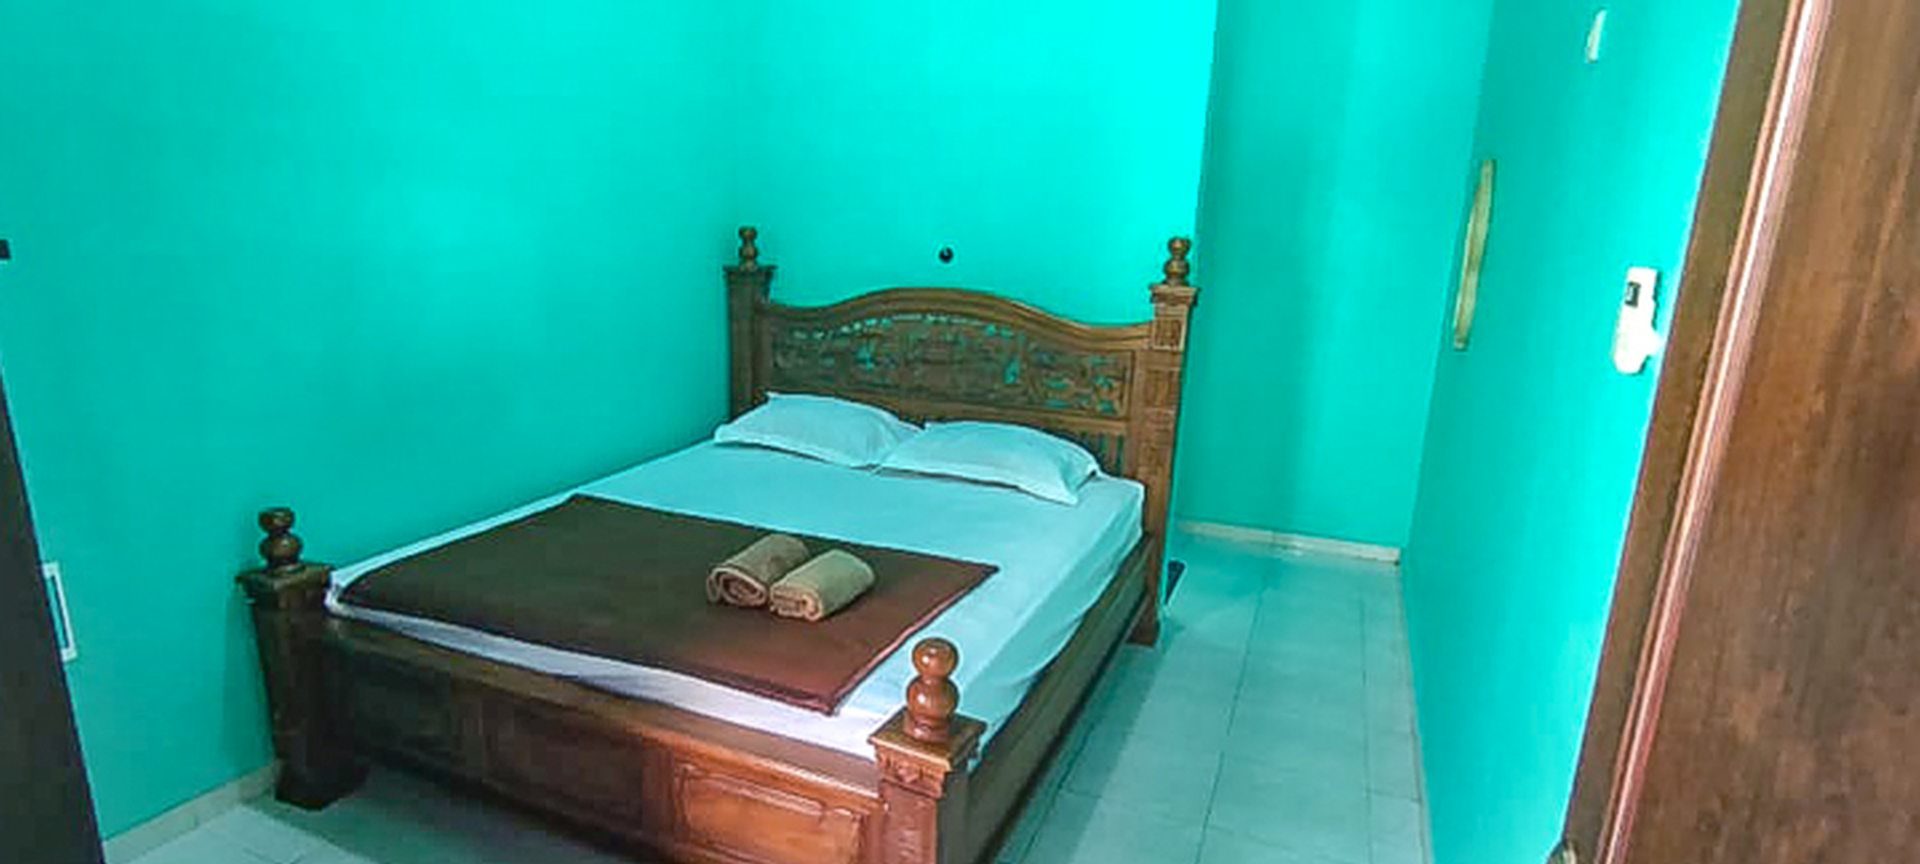 Bedroom, Hotel Wisata Ziarah Sunan Bonang Syariah RedPartner, Tuban